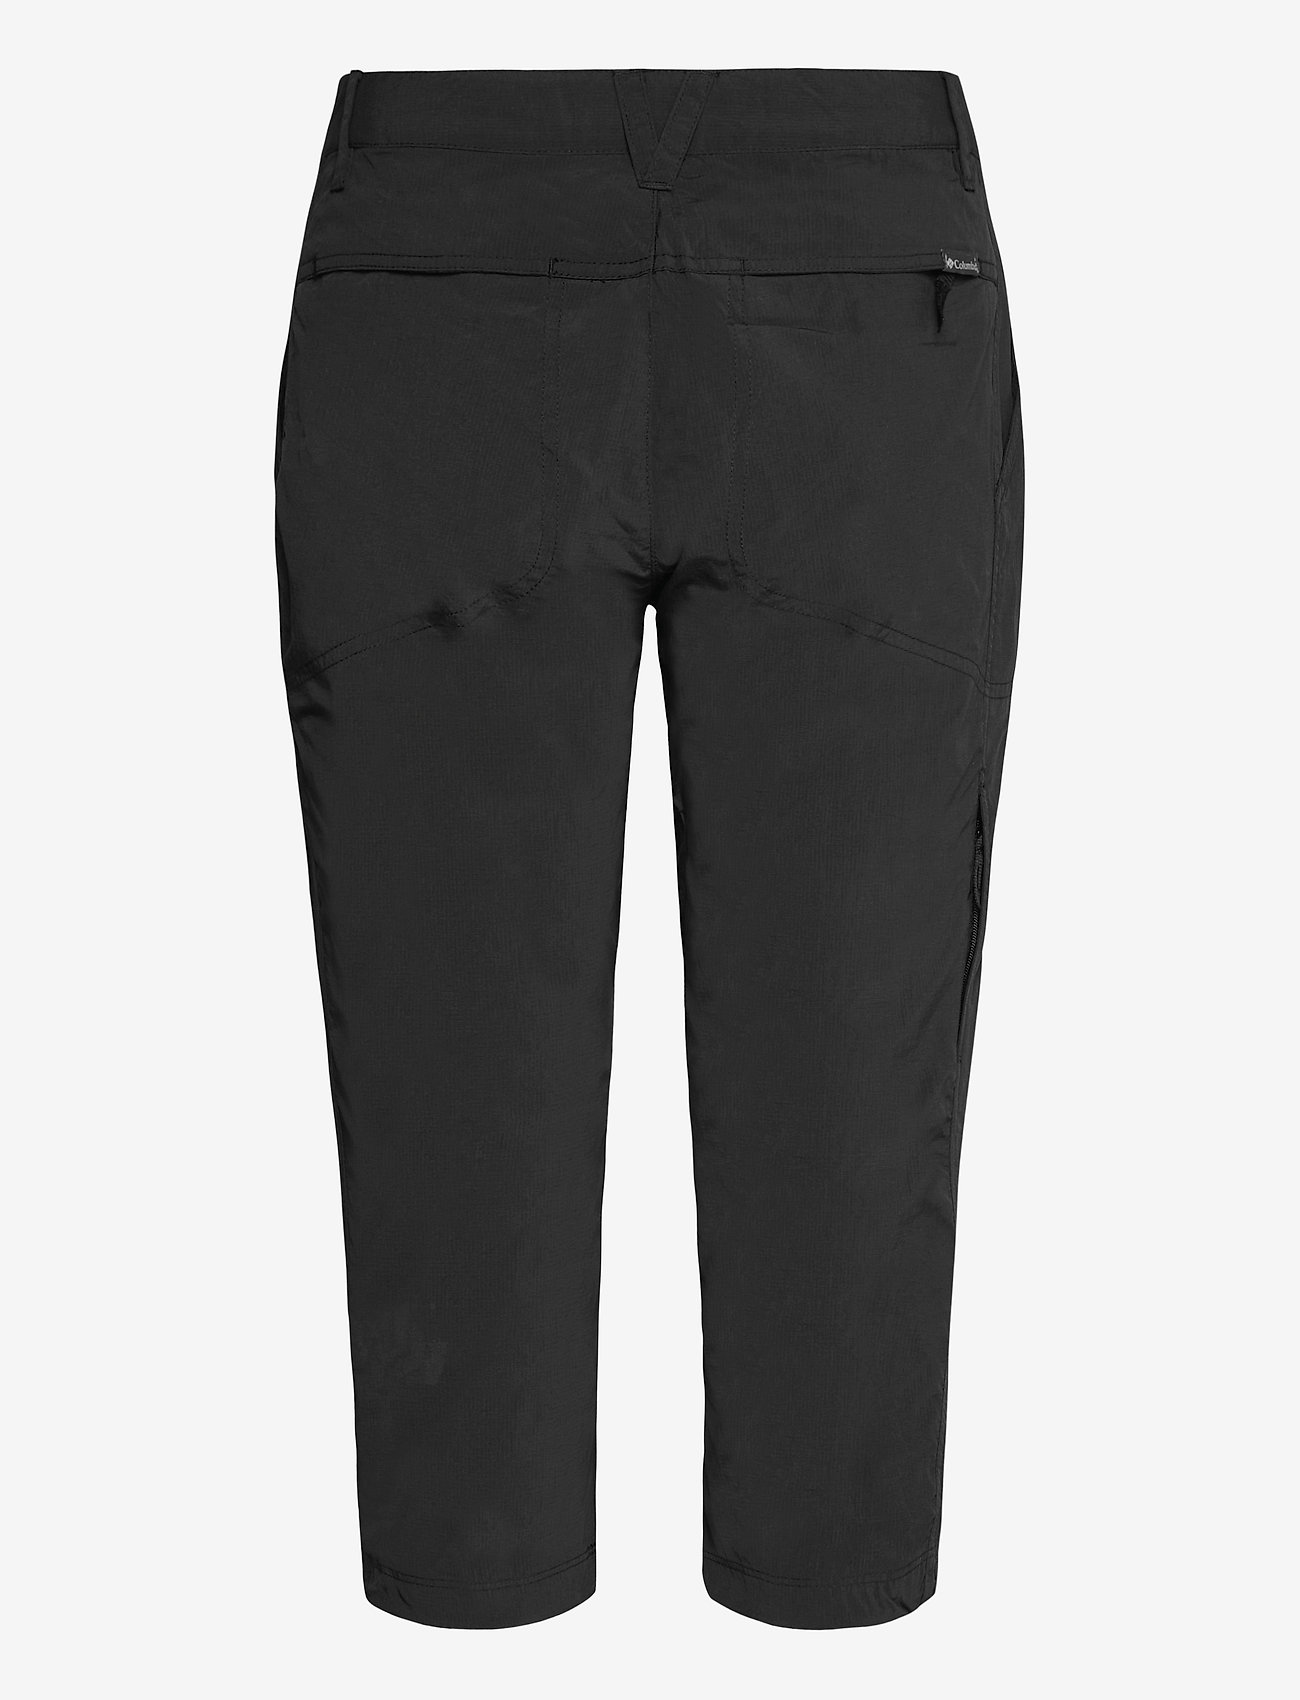 Columbia Sportswear - Silver Ridge™ 2.0 Capri - dames - black - 1